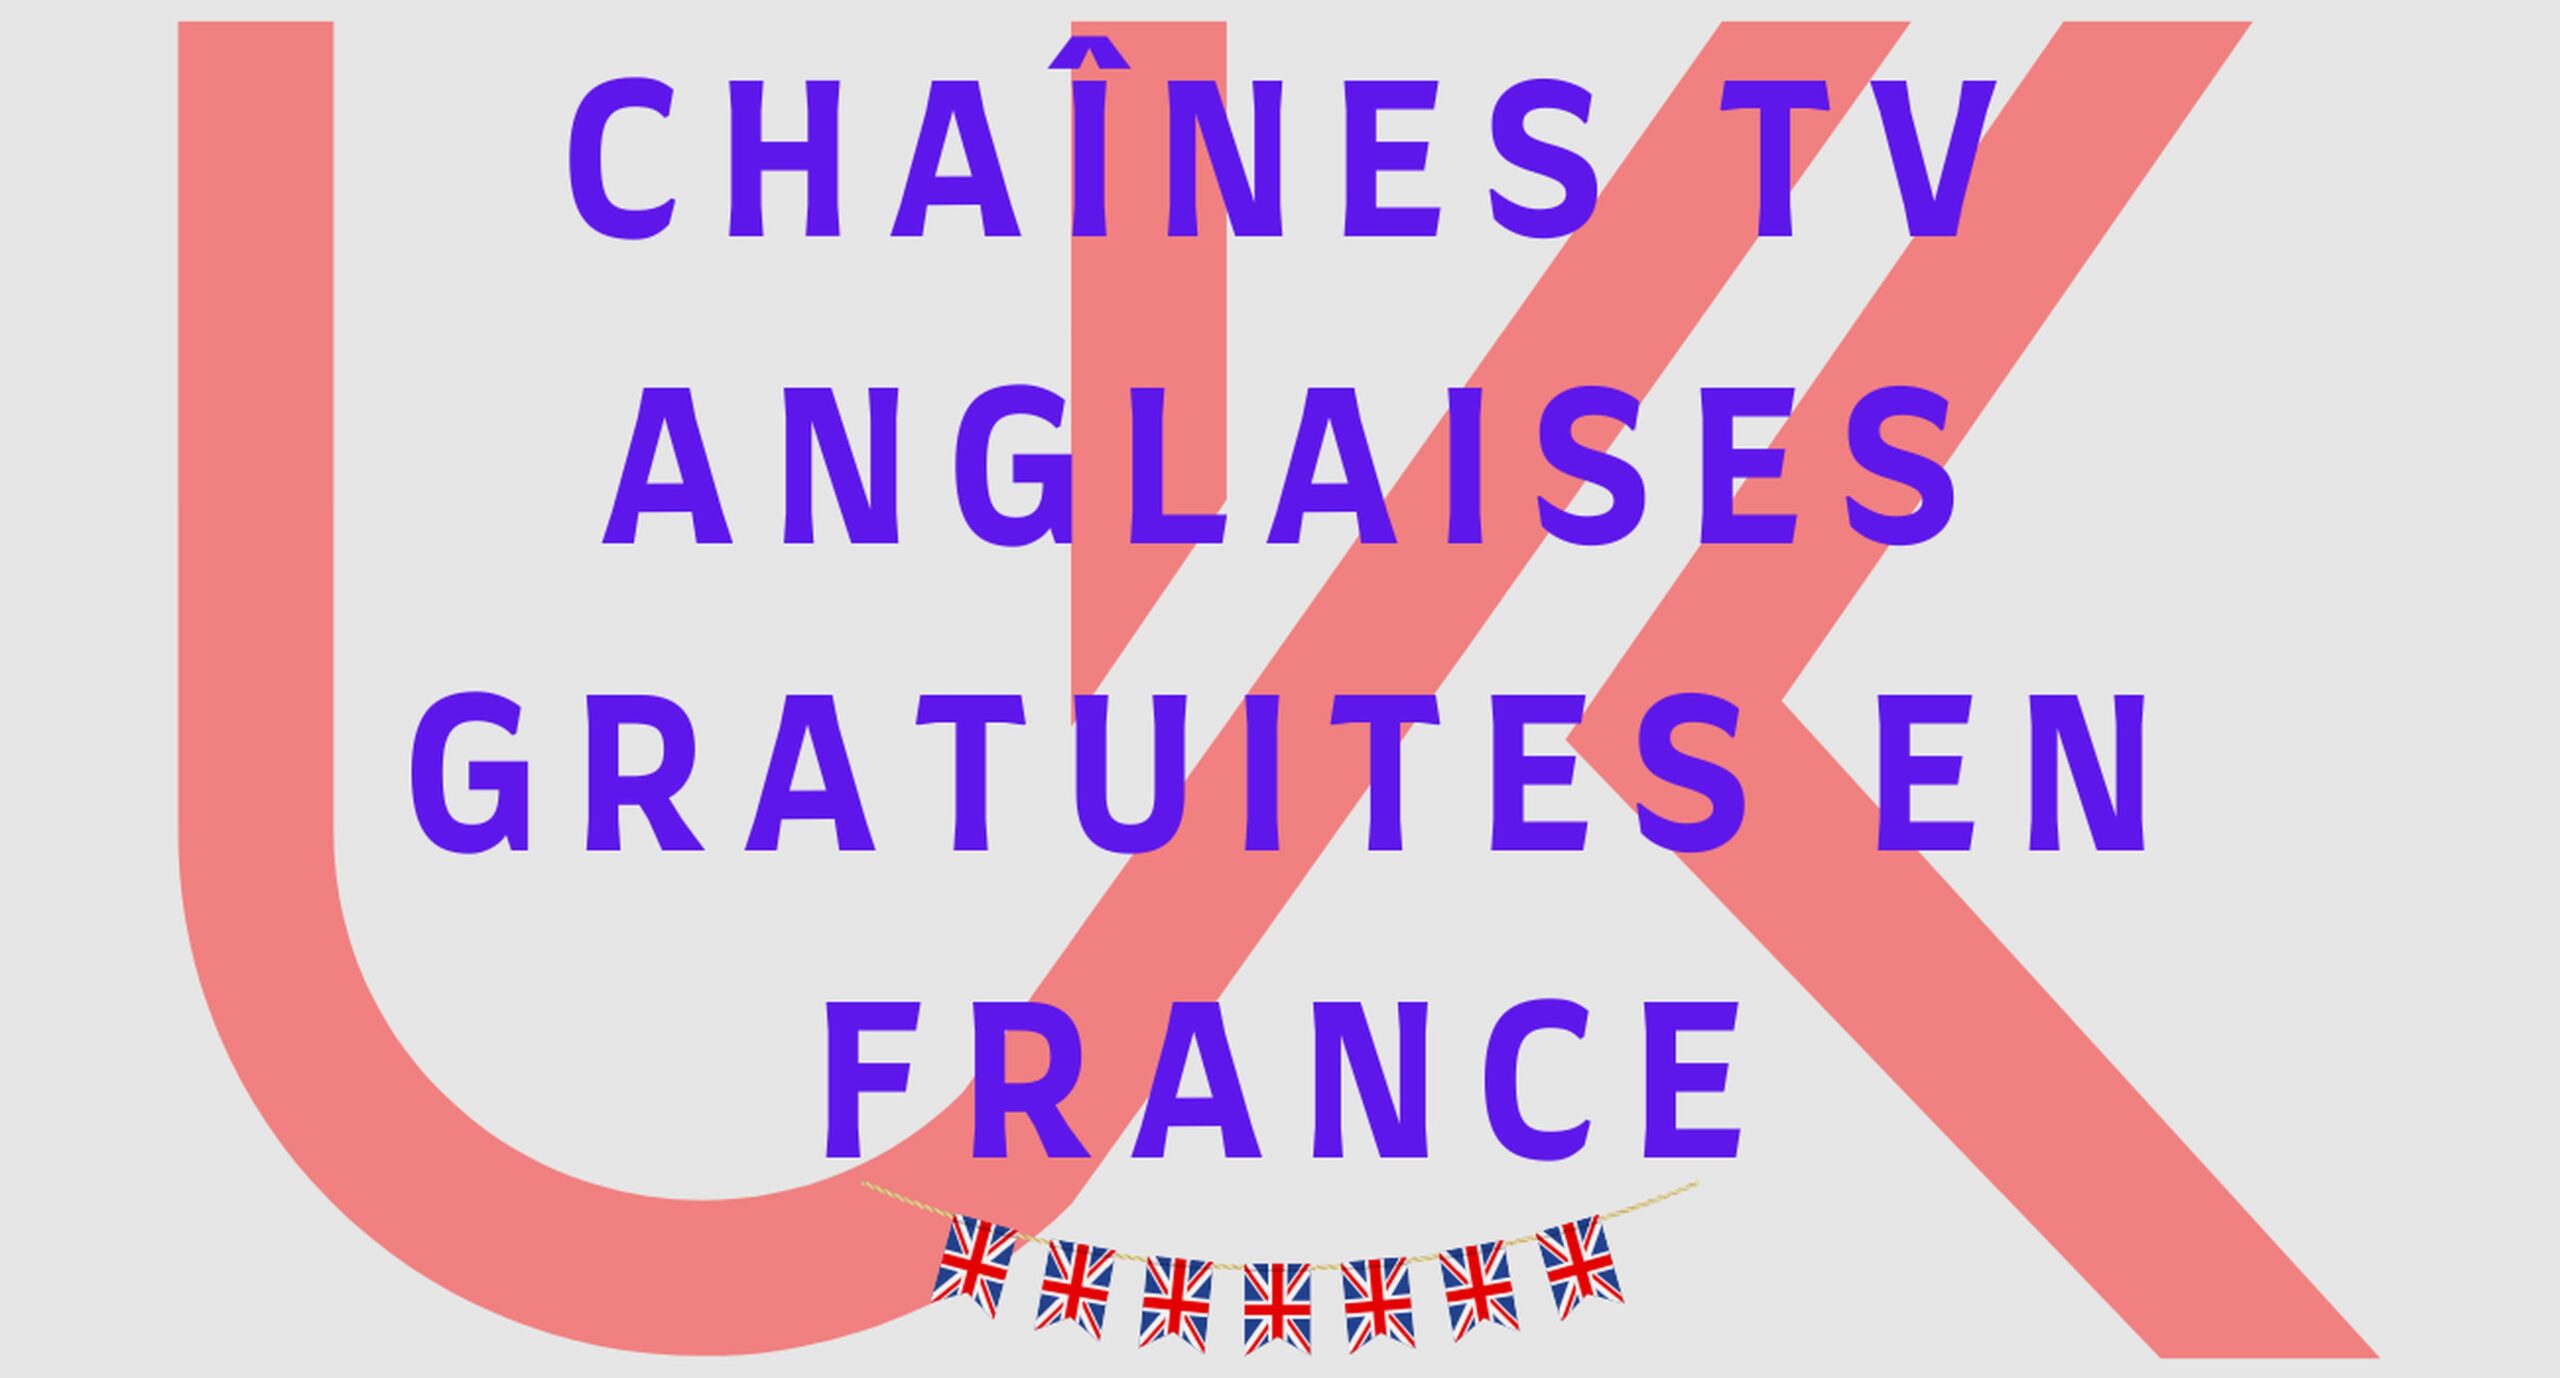 Chaînes TV Anglaises gratuites en France - 55 Chaînes TV disponibles 20